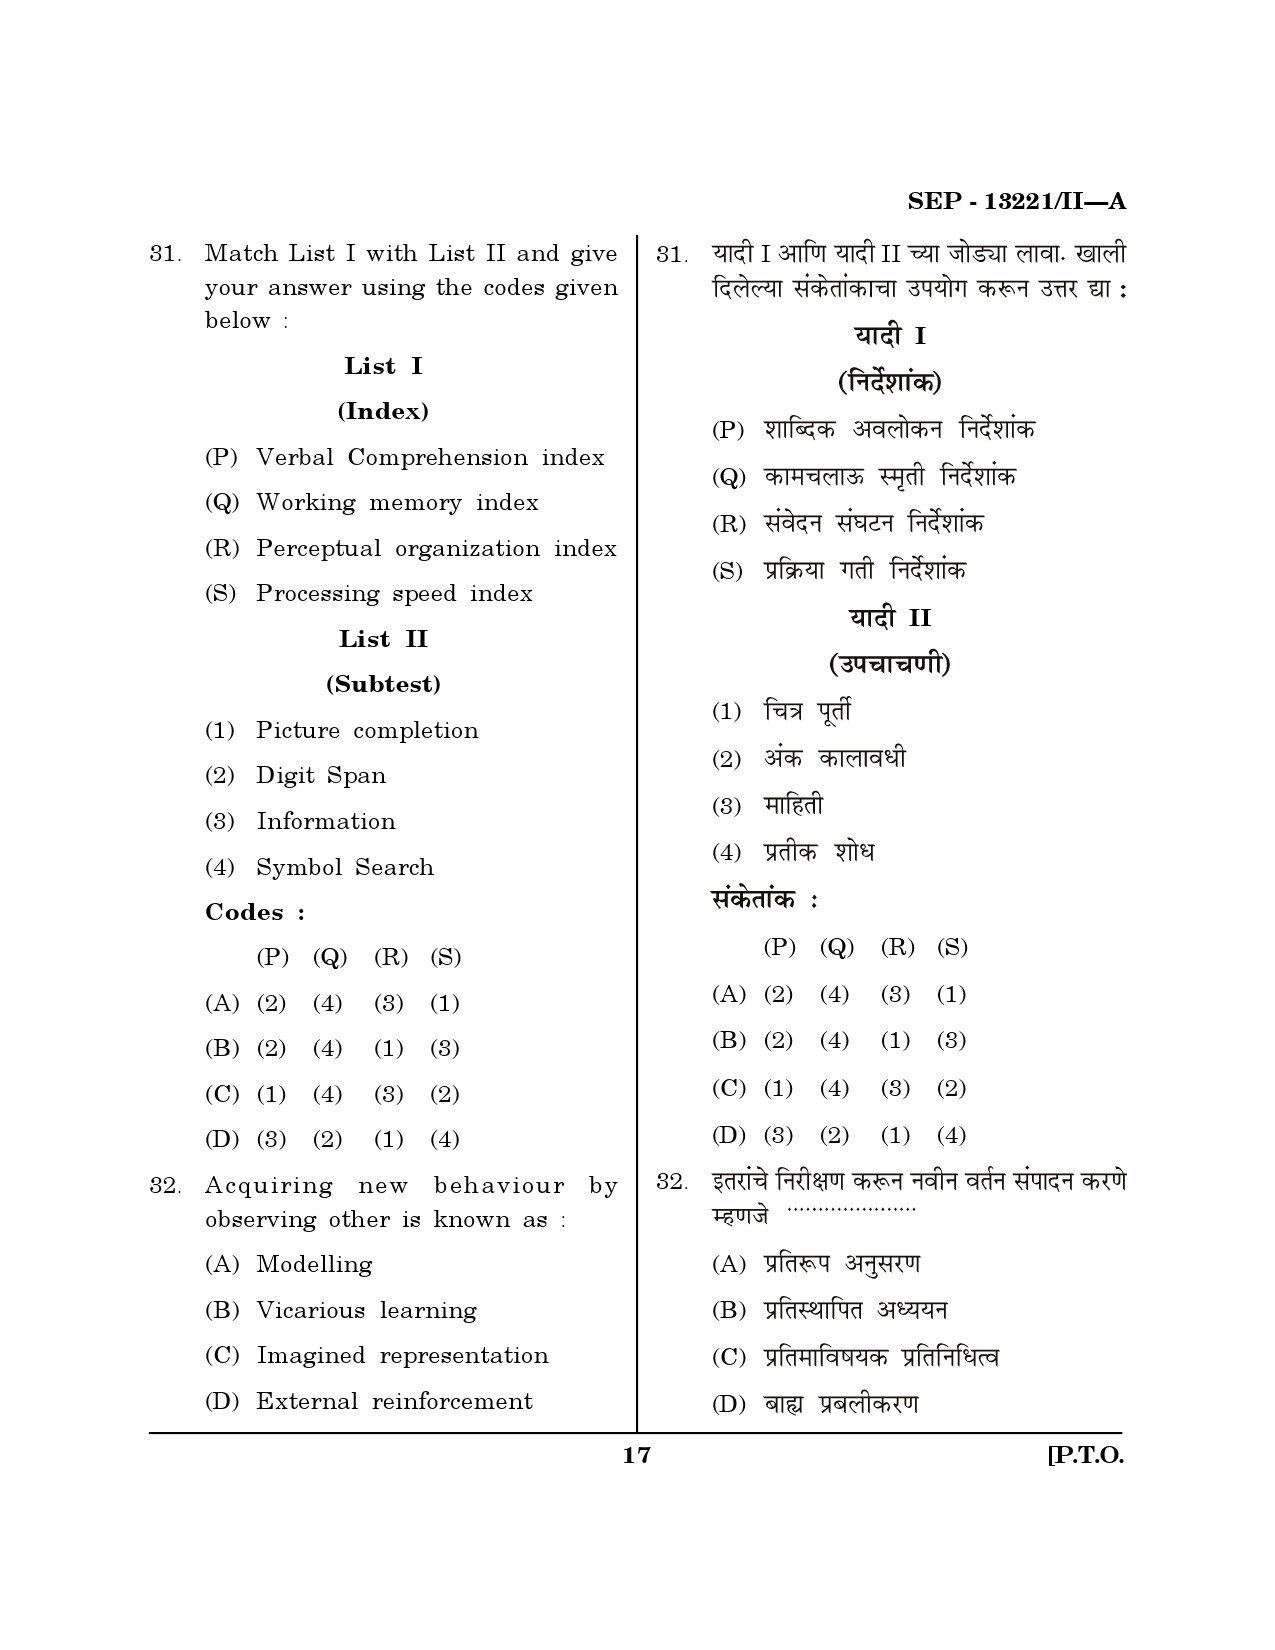 Maharashtra SET Psychology Exam Question Paper September 2021 16